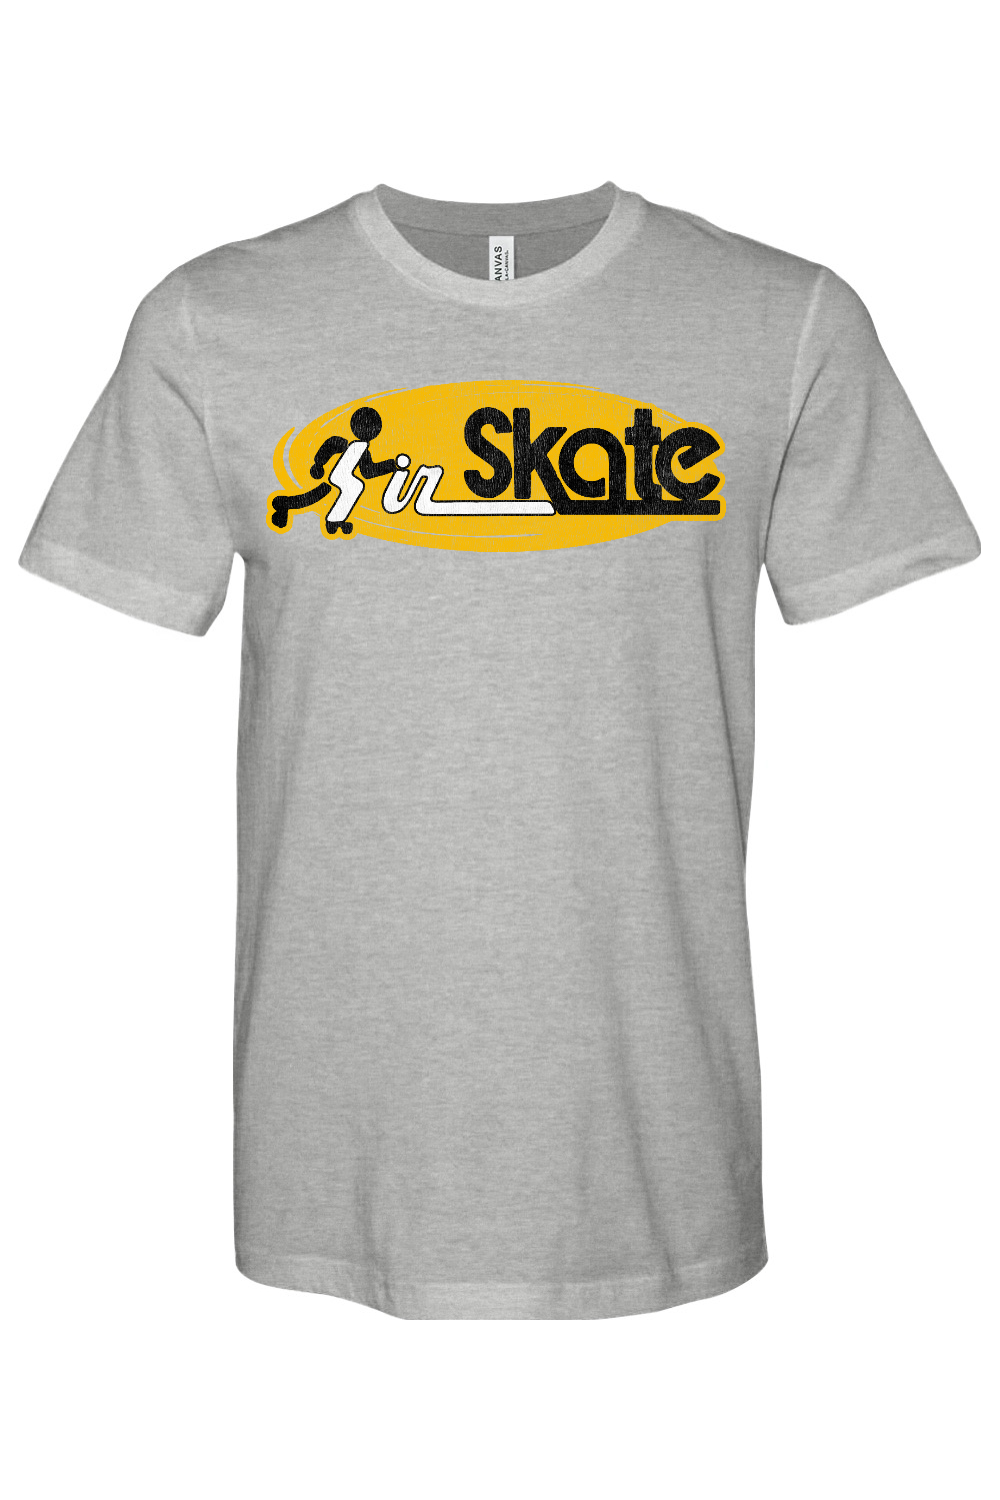 Sir Skate - Altoona/ State College, PA - Yinzylvania